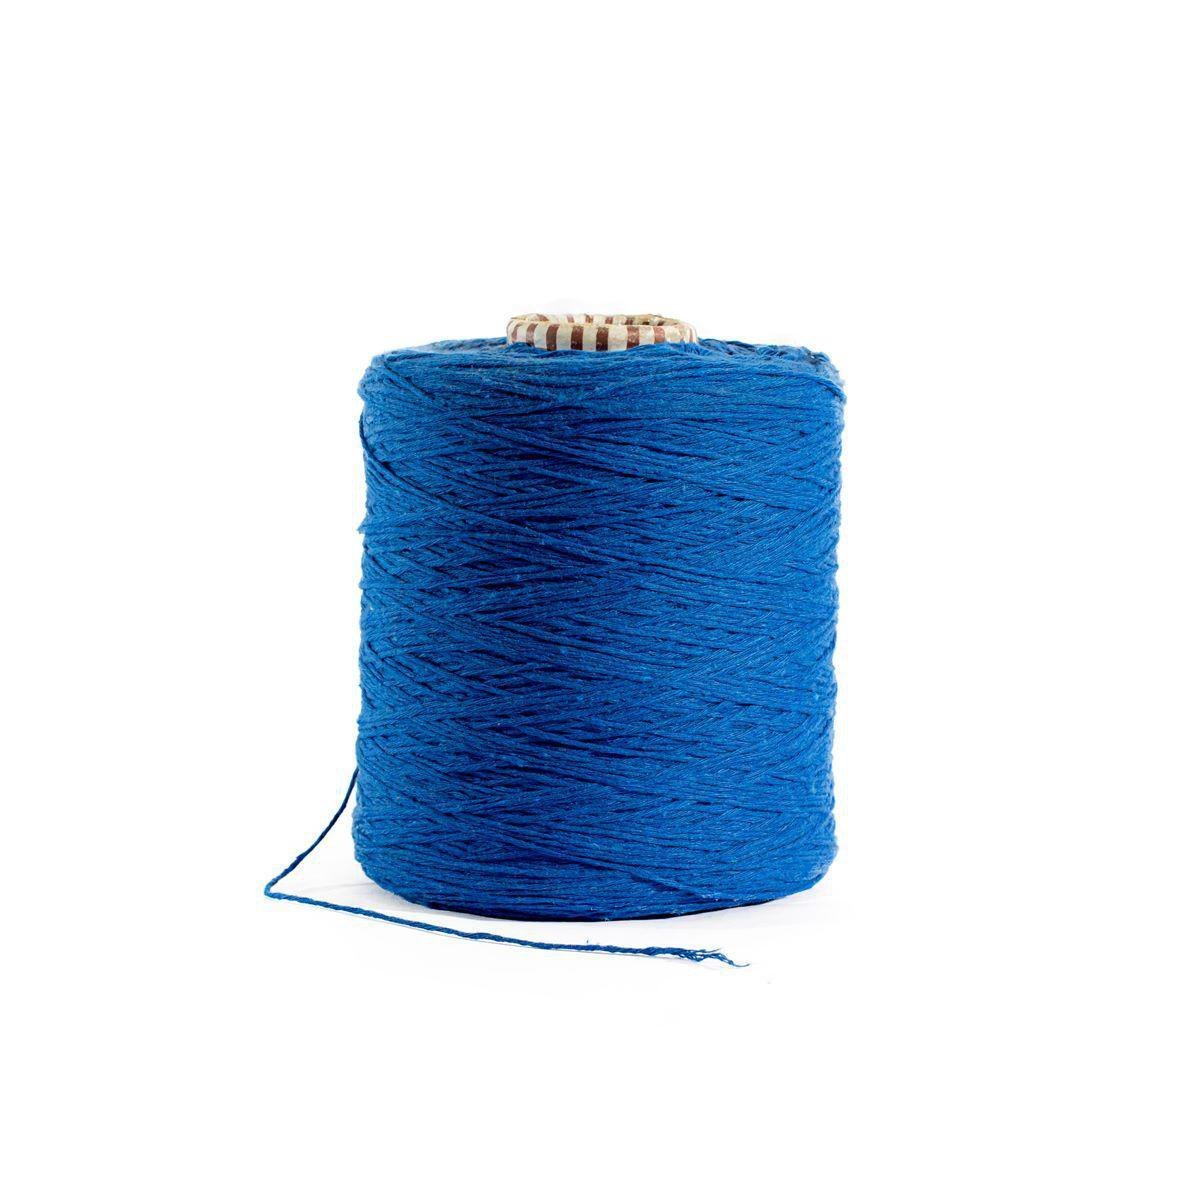 Barbante Ou Linha Para Crochê Colorido Nº 8 - Azul Anil - 1